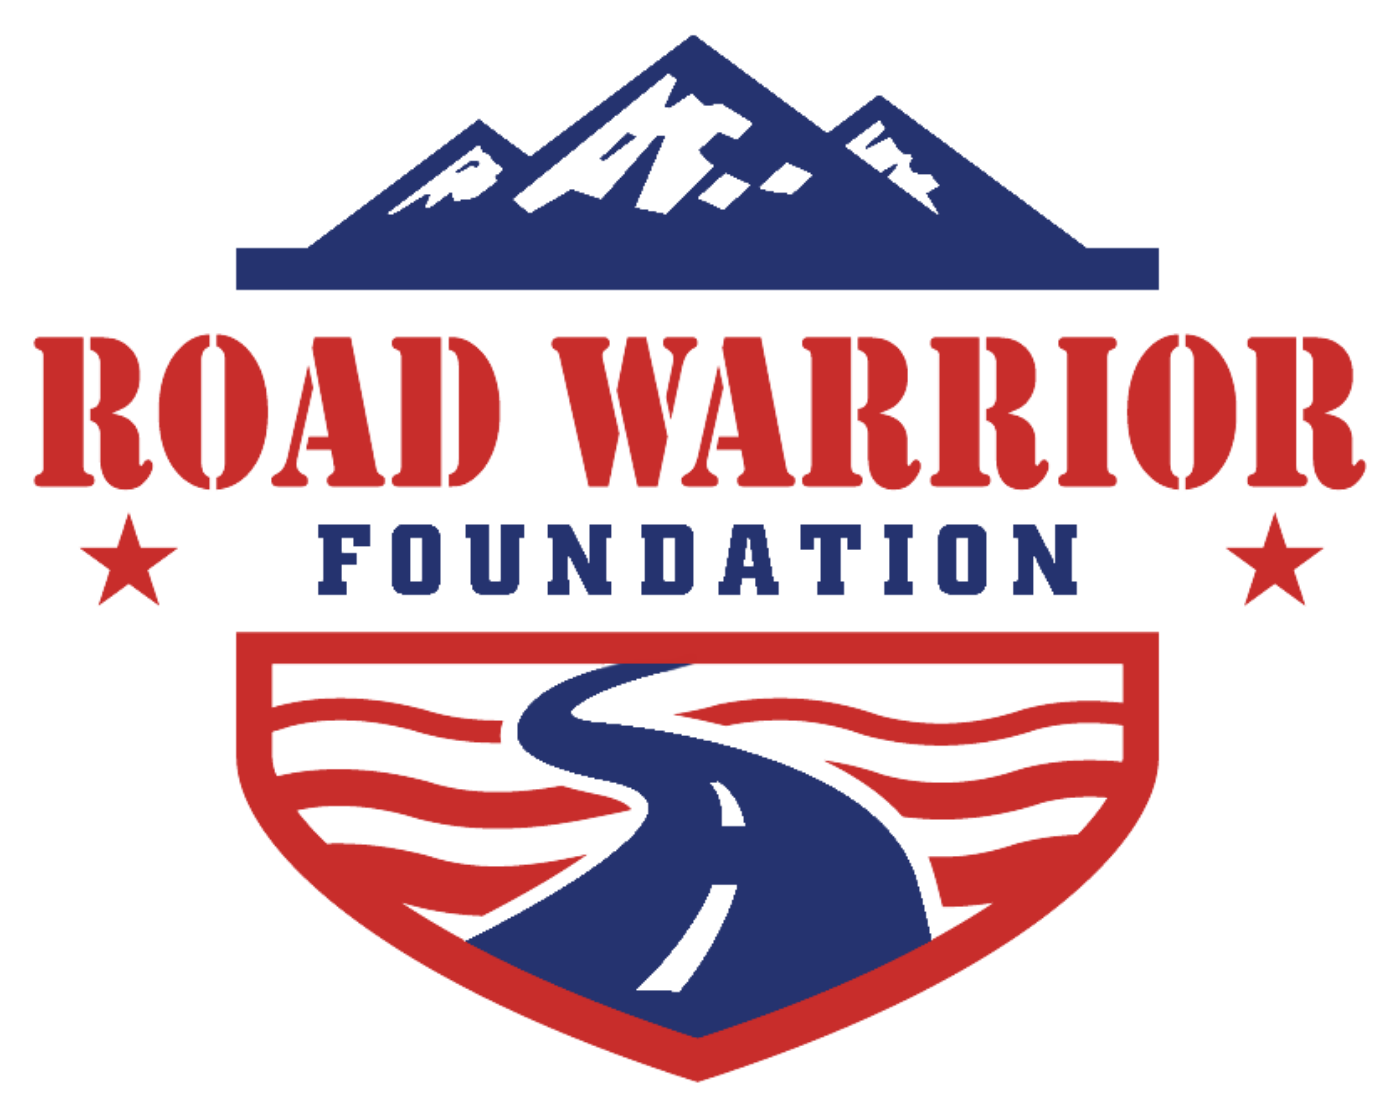 Road Warrior Foundation